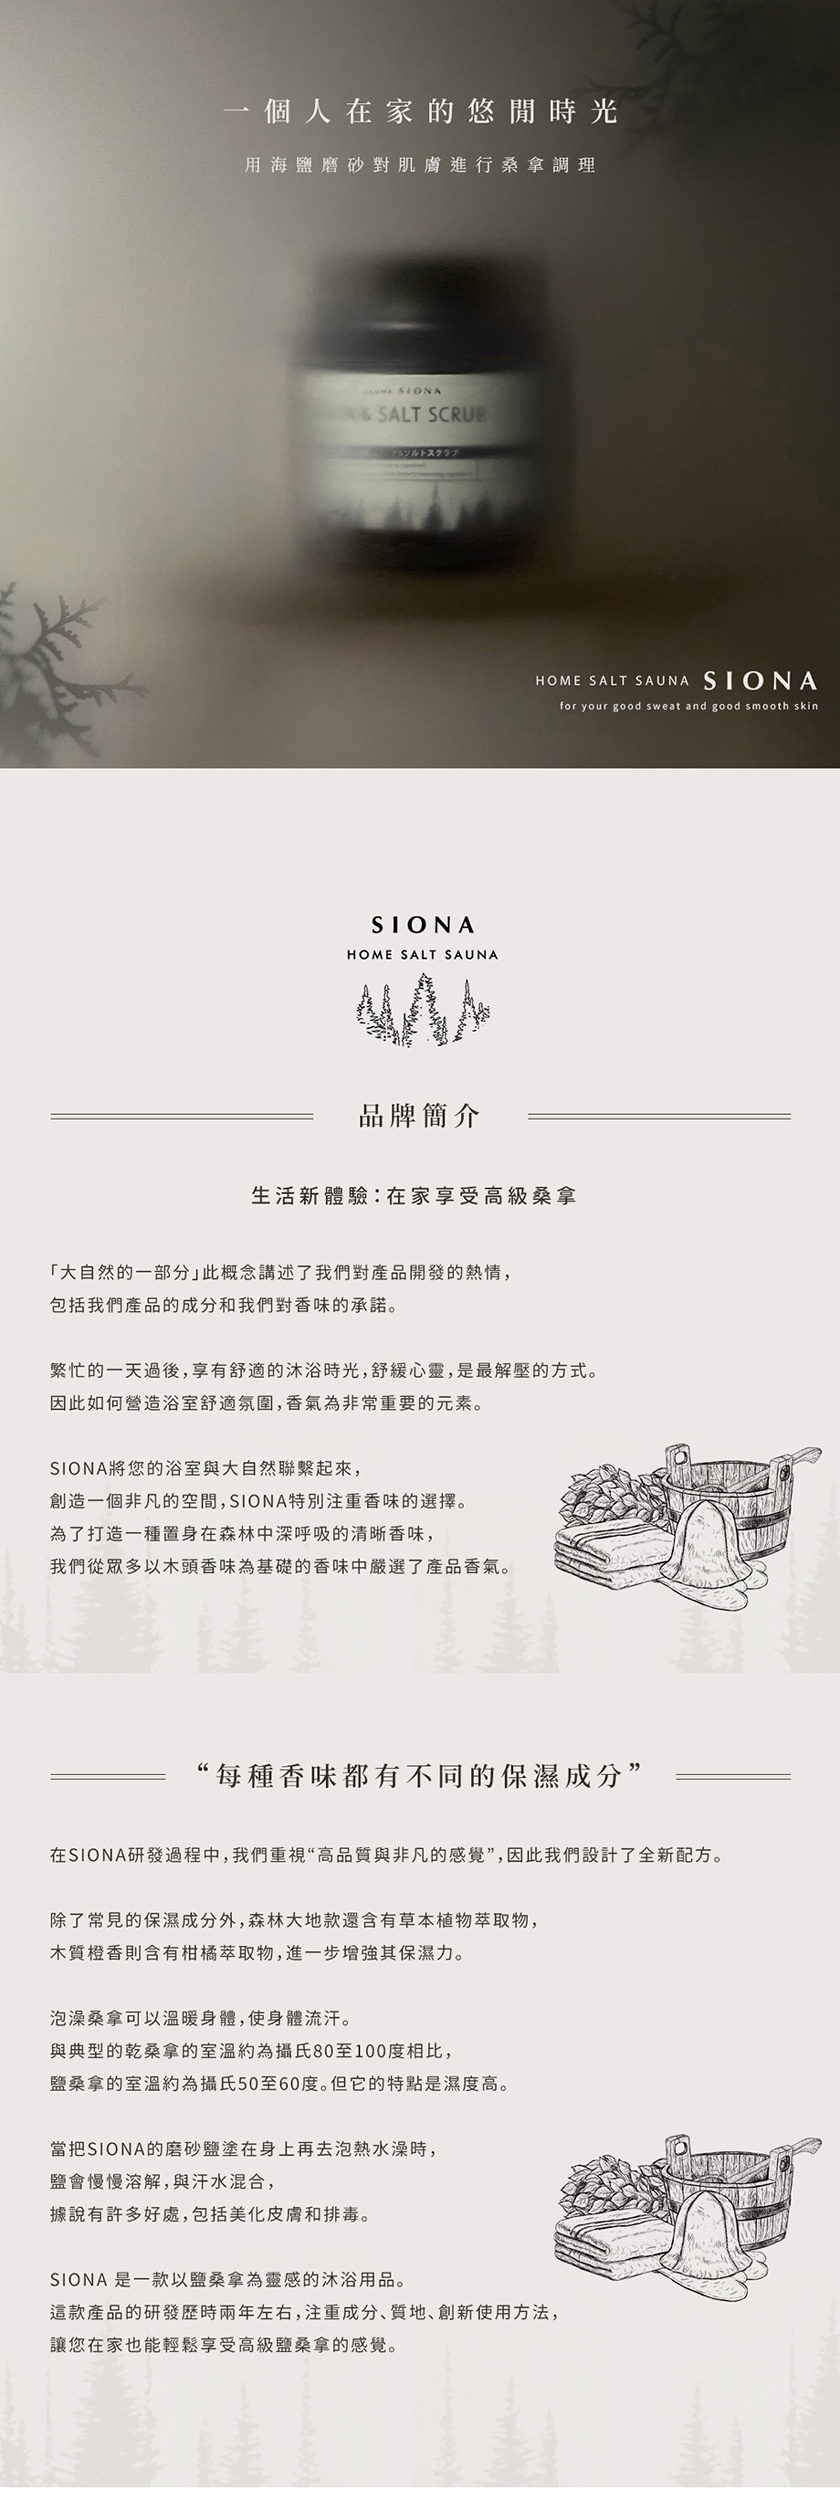 SIONA-磨砂膏長條圖-1_01